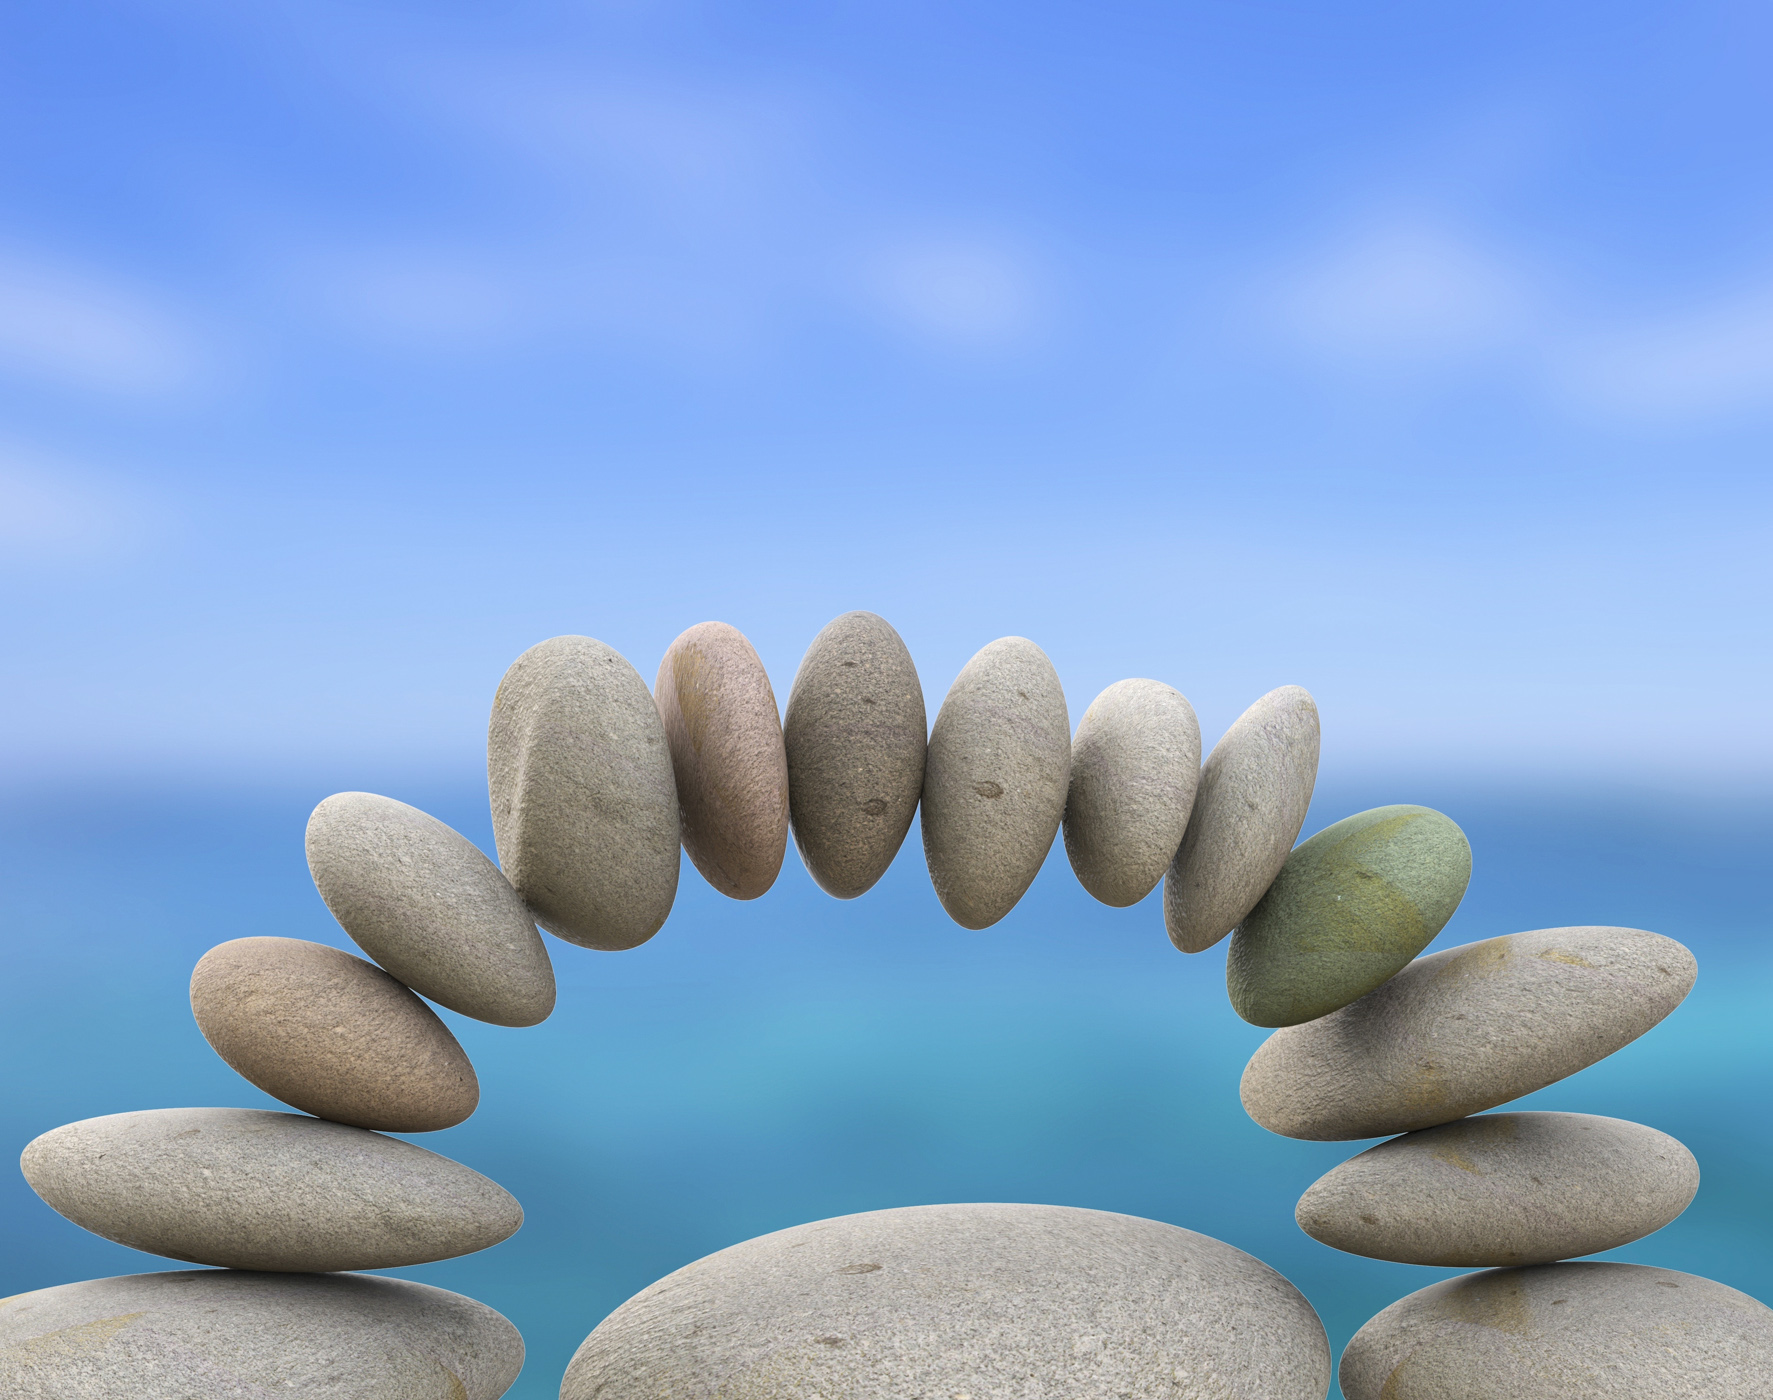 Spa stones represents perfect balance and balanced photo